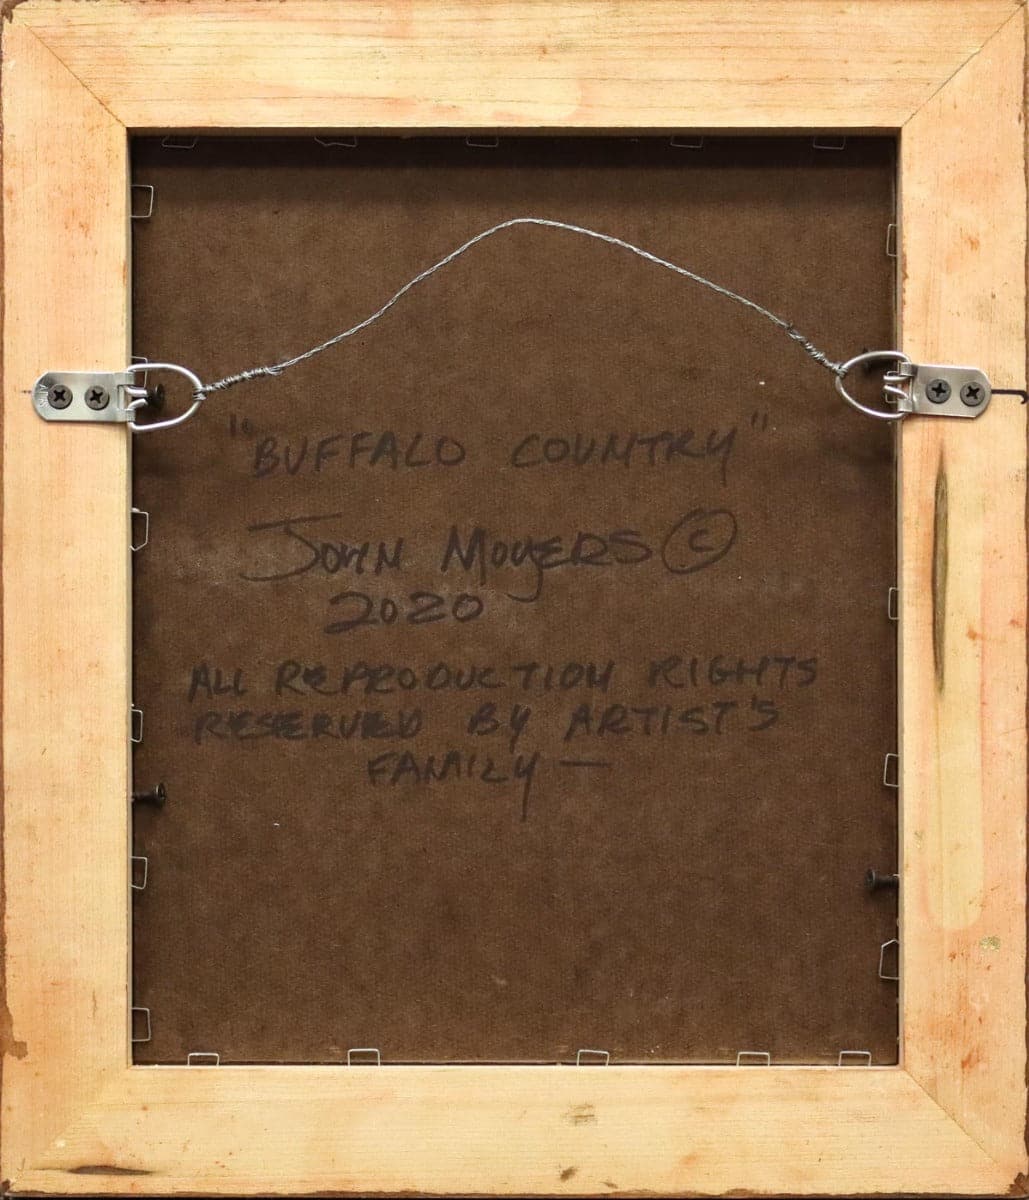 John Moyer - Buffalo Country (PLV1359)2
